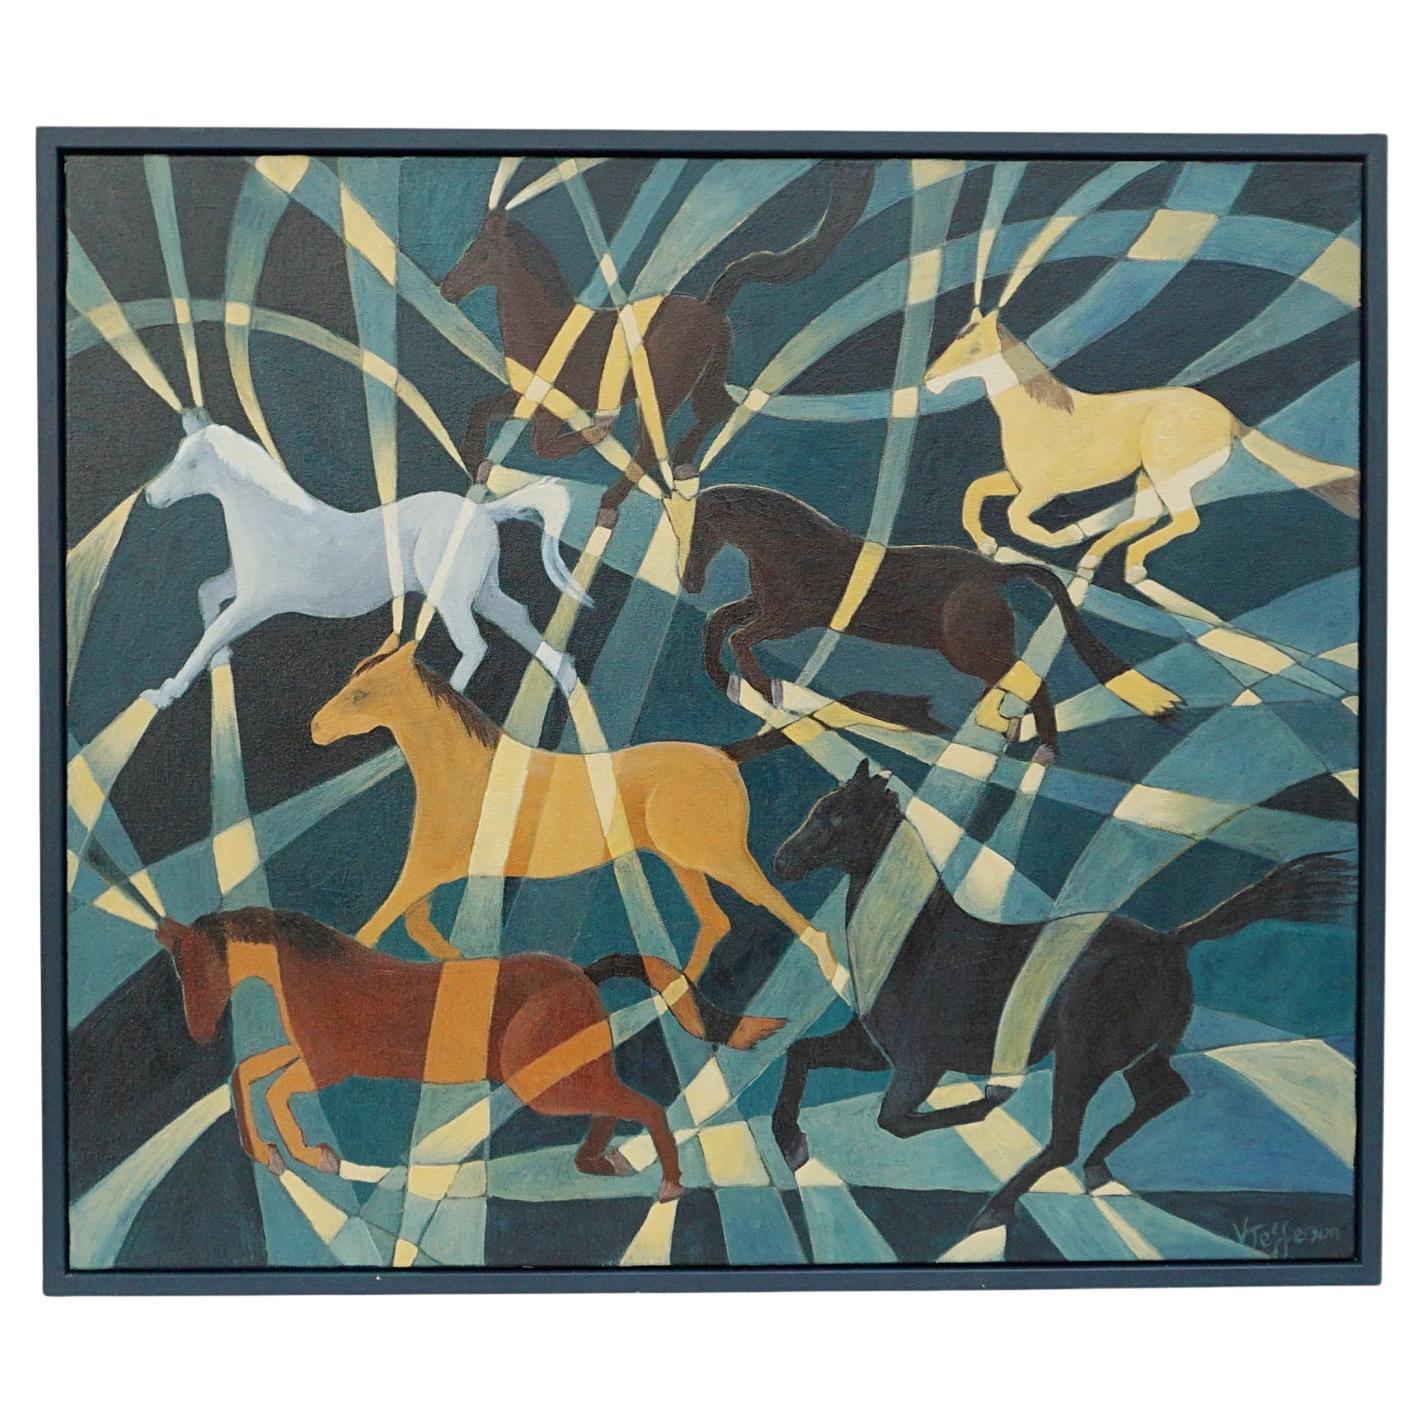 'Wild Horses by Vera Jefferson Contemporary Oil on Canvas